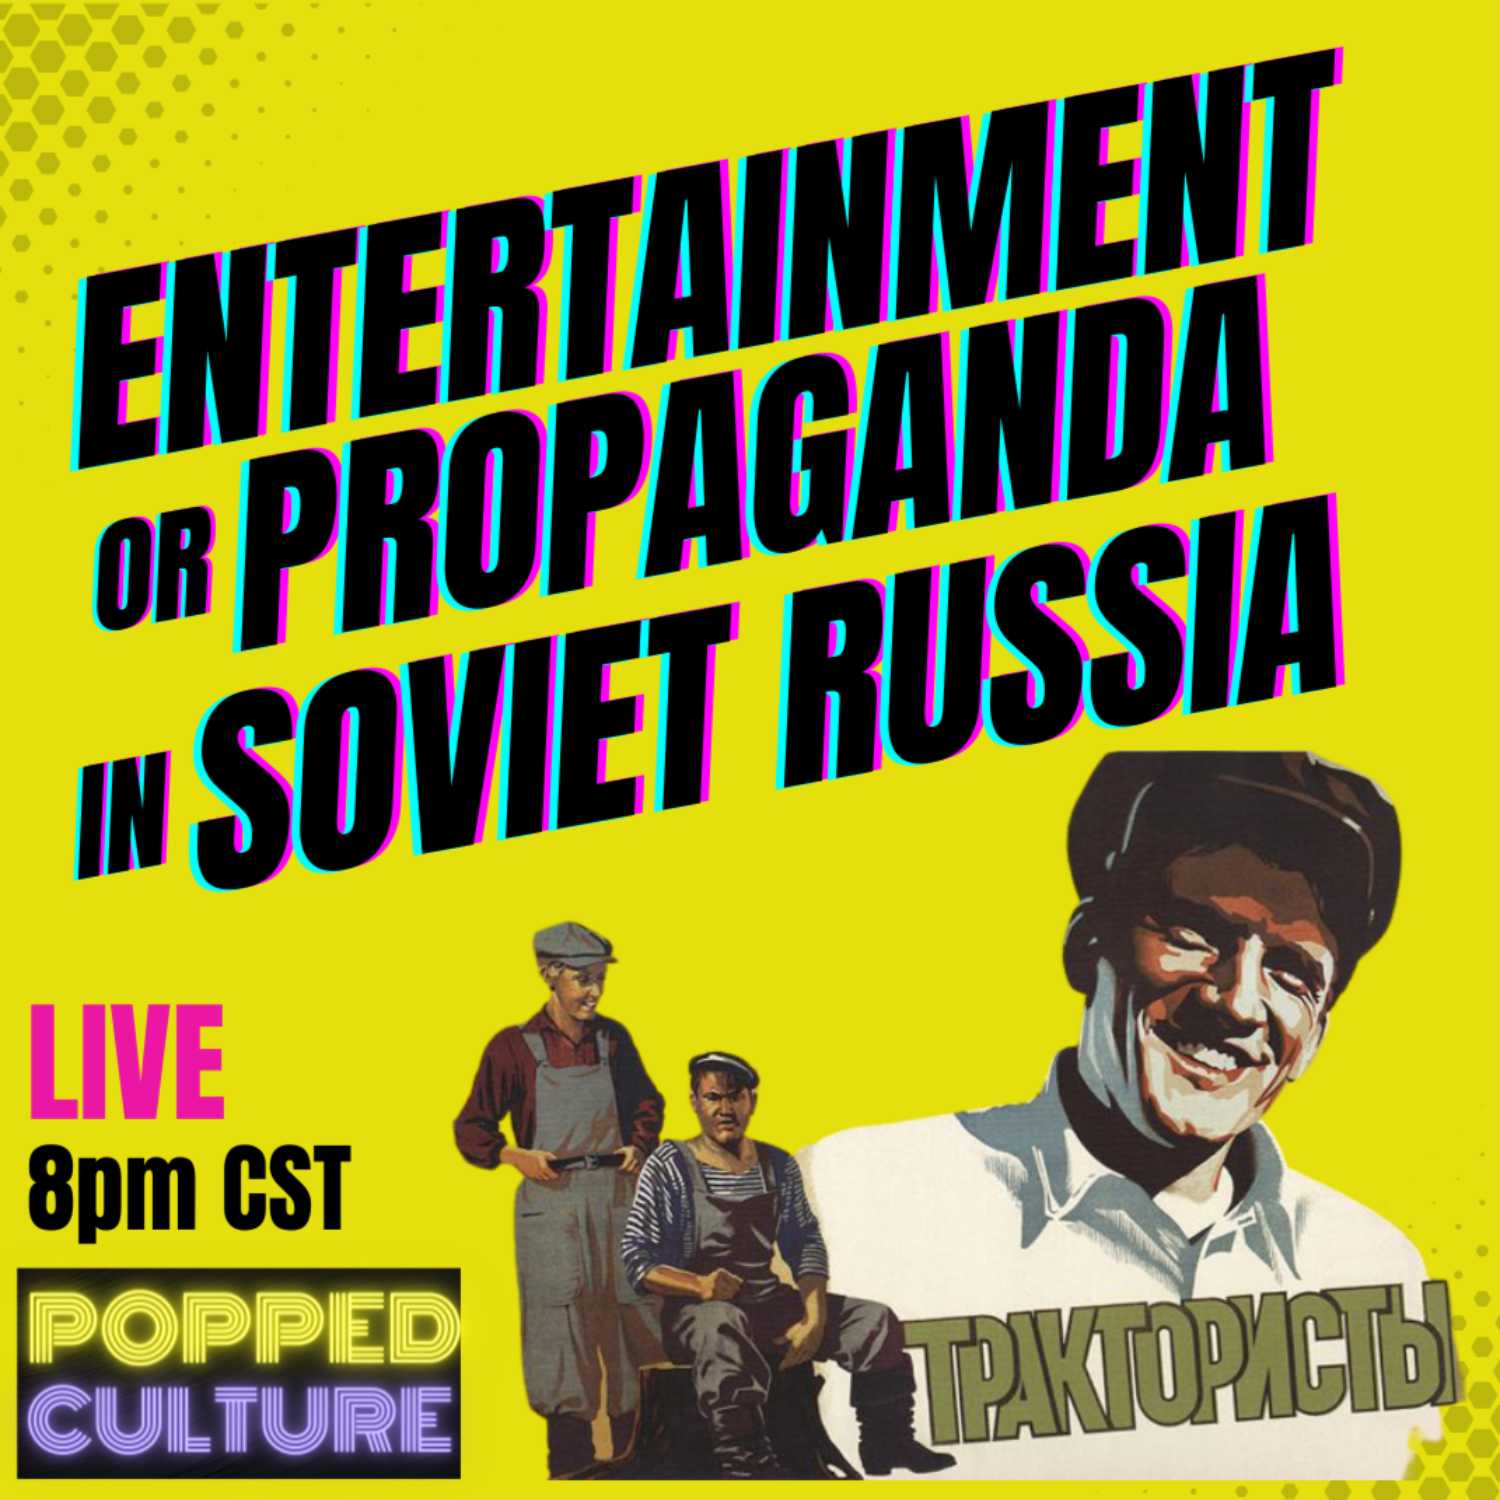 Popped Culture - Entertainment or Propaganda in Soviet Russia